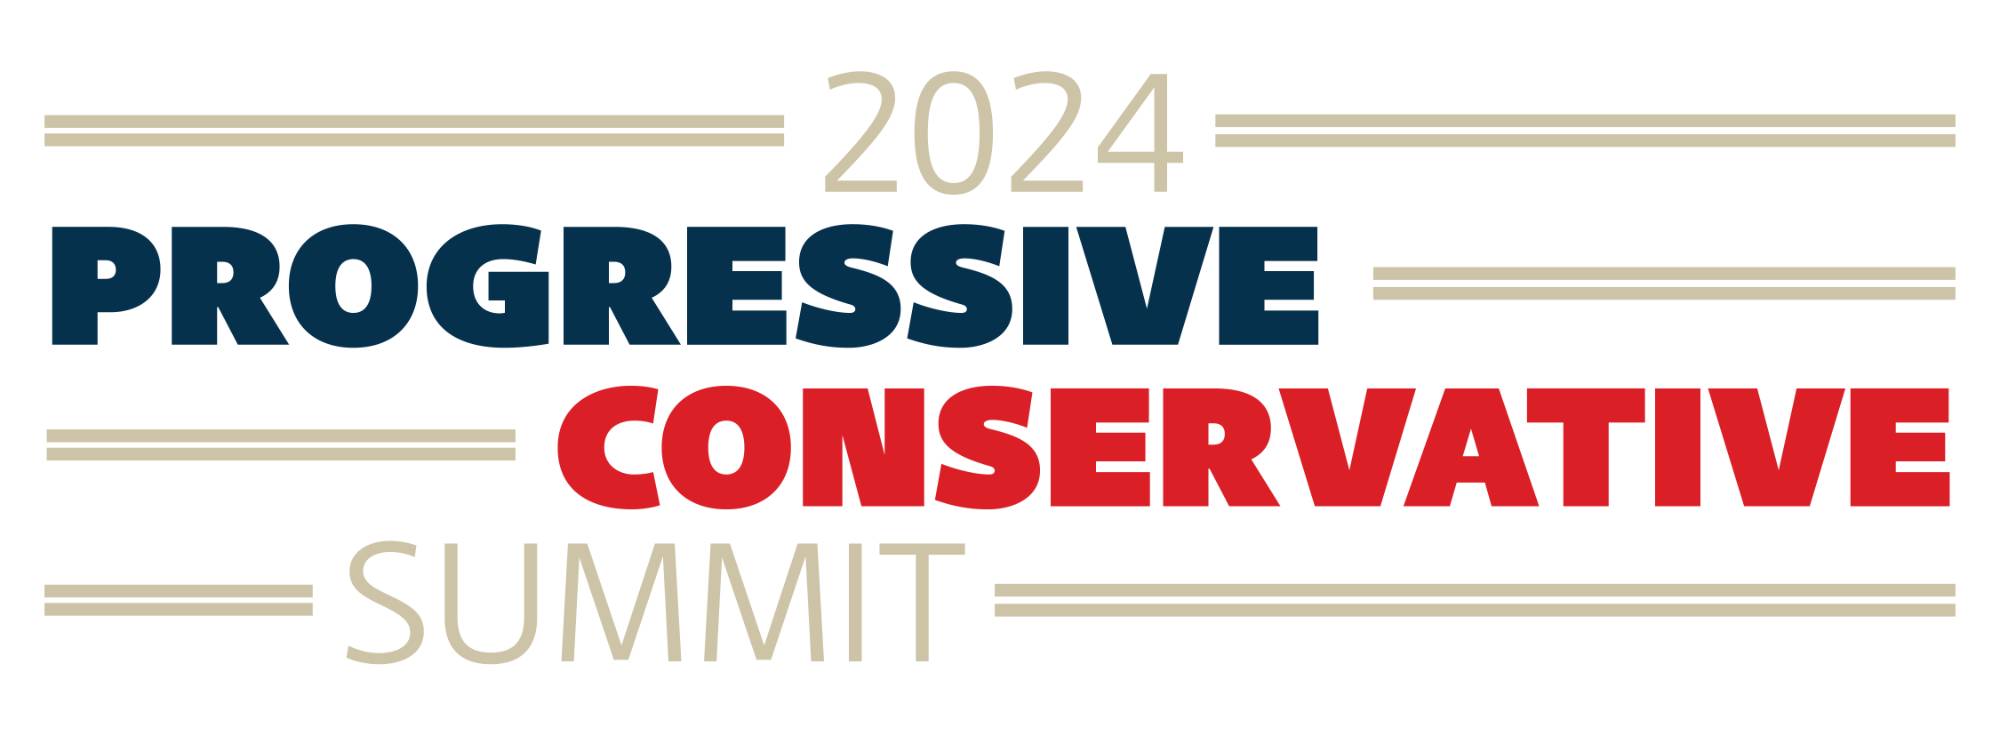 2024 progressive conservative summit